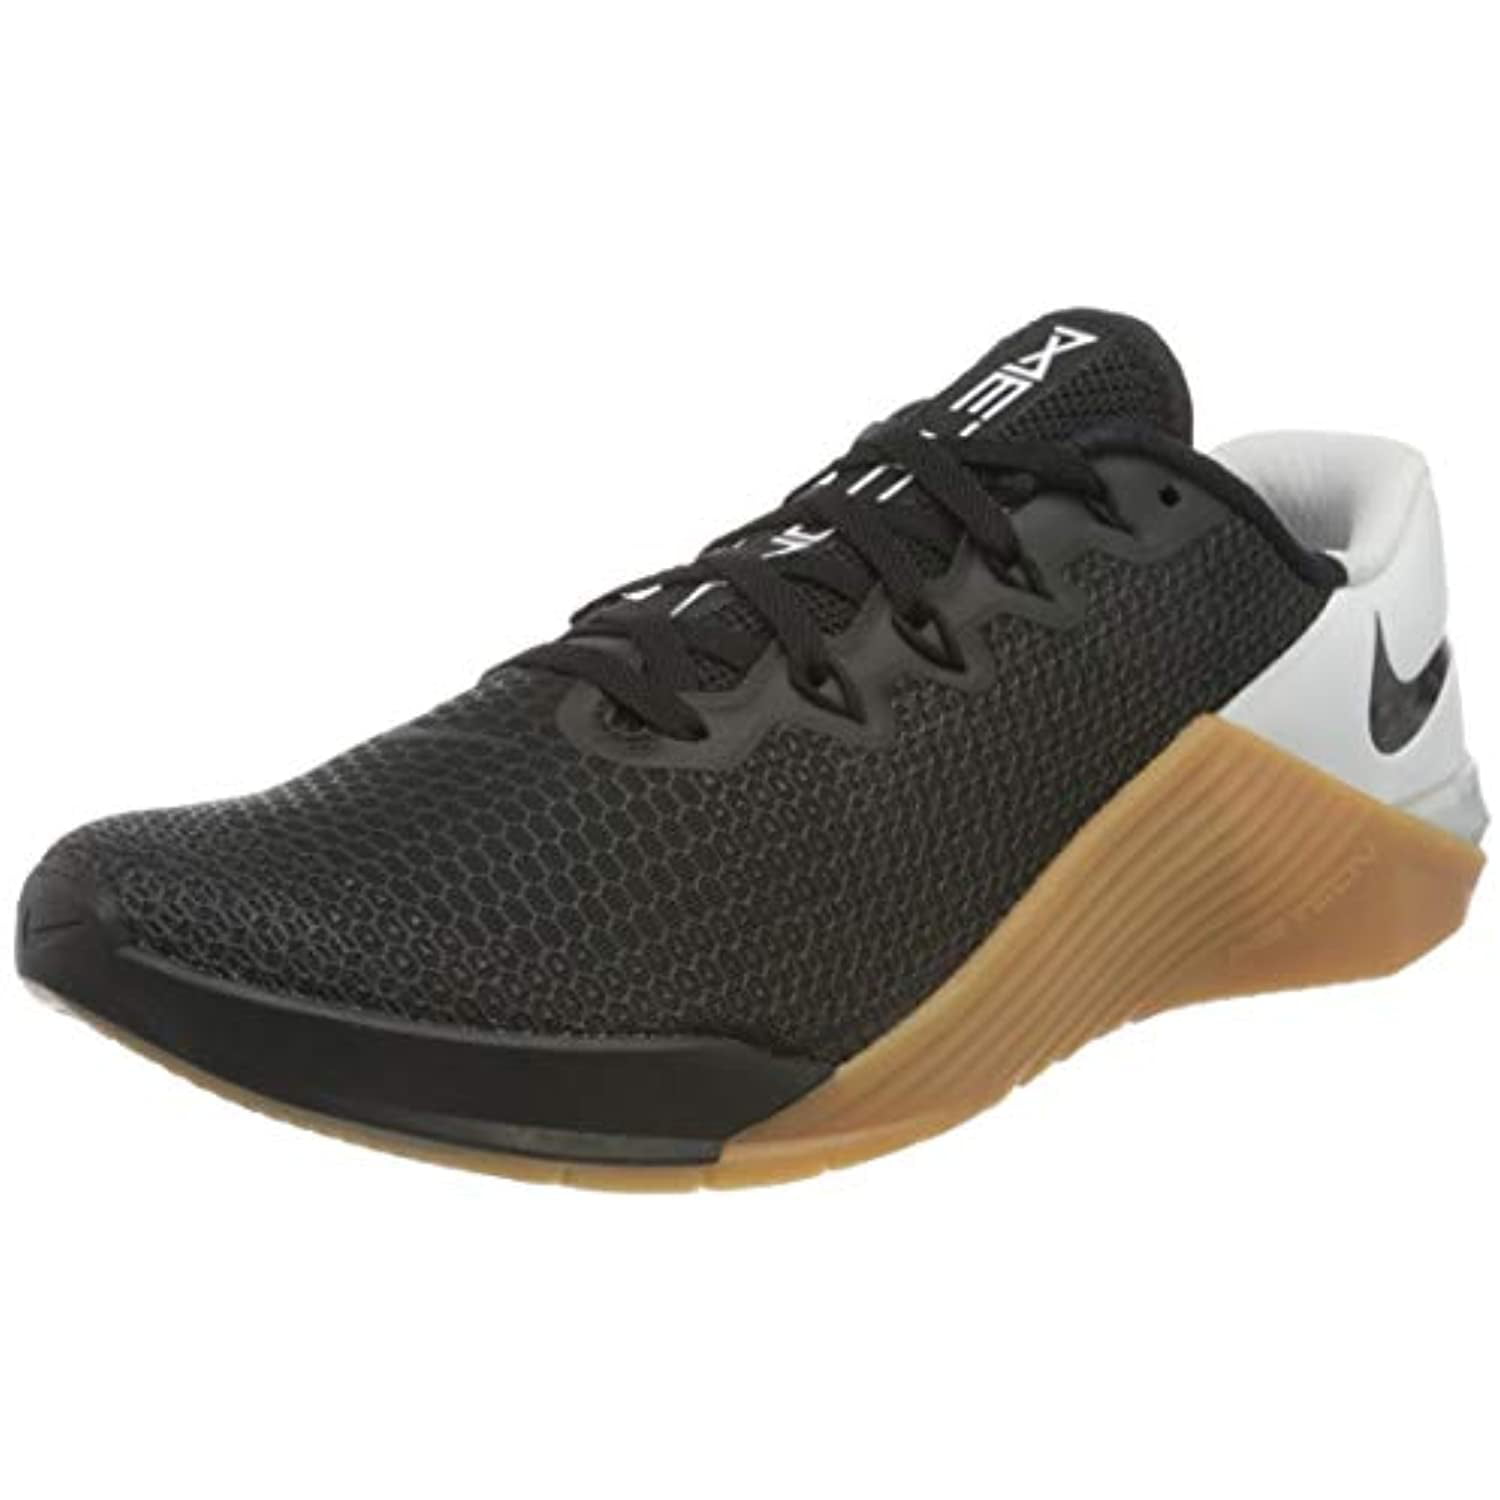 Decepcionado agricultores Bergantín Nike Metcon 5 Men's Training Shoe Black/Black-White-Gum MED Brown Size 8 -  Walmart.com